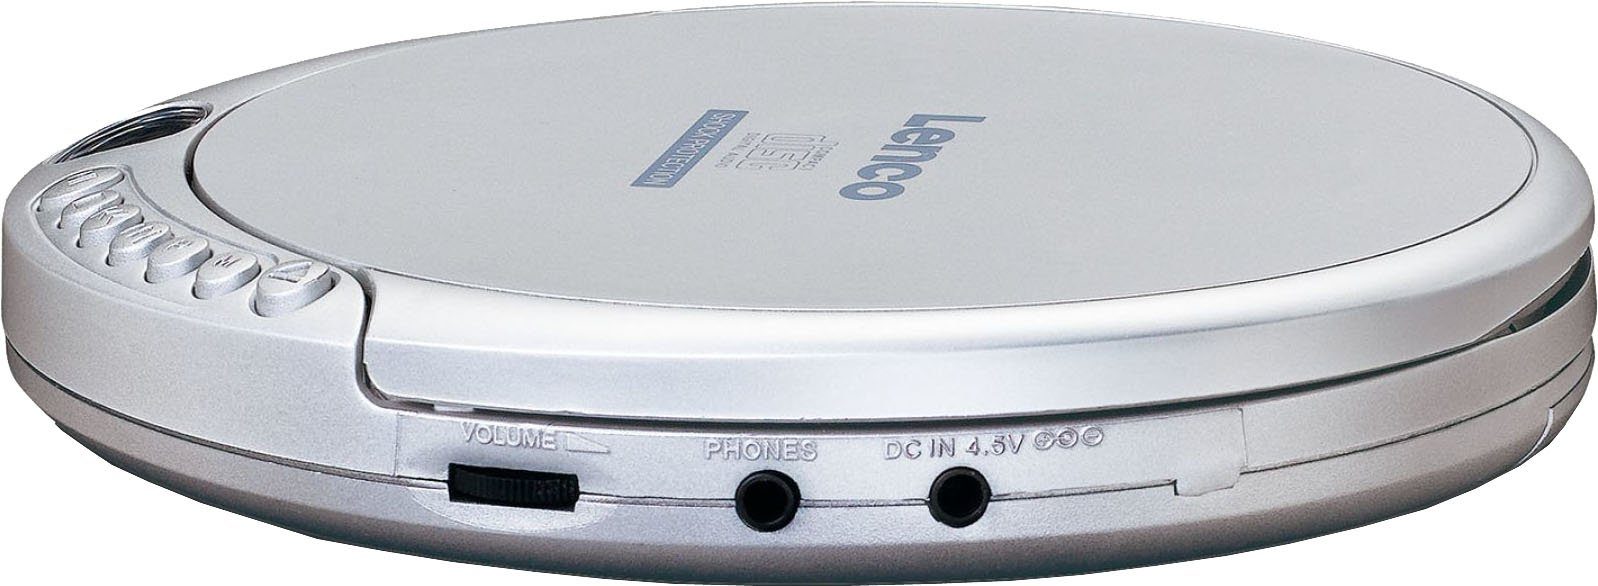 Lenco CD-201Sl Silber (Anti-Schock-Funktion) CD-Player